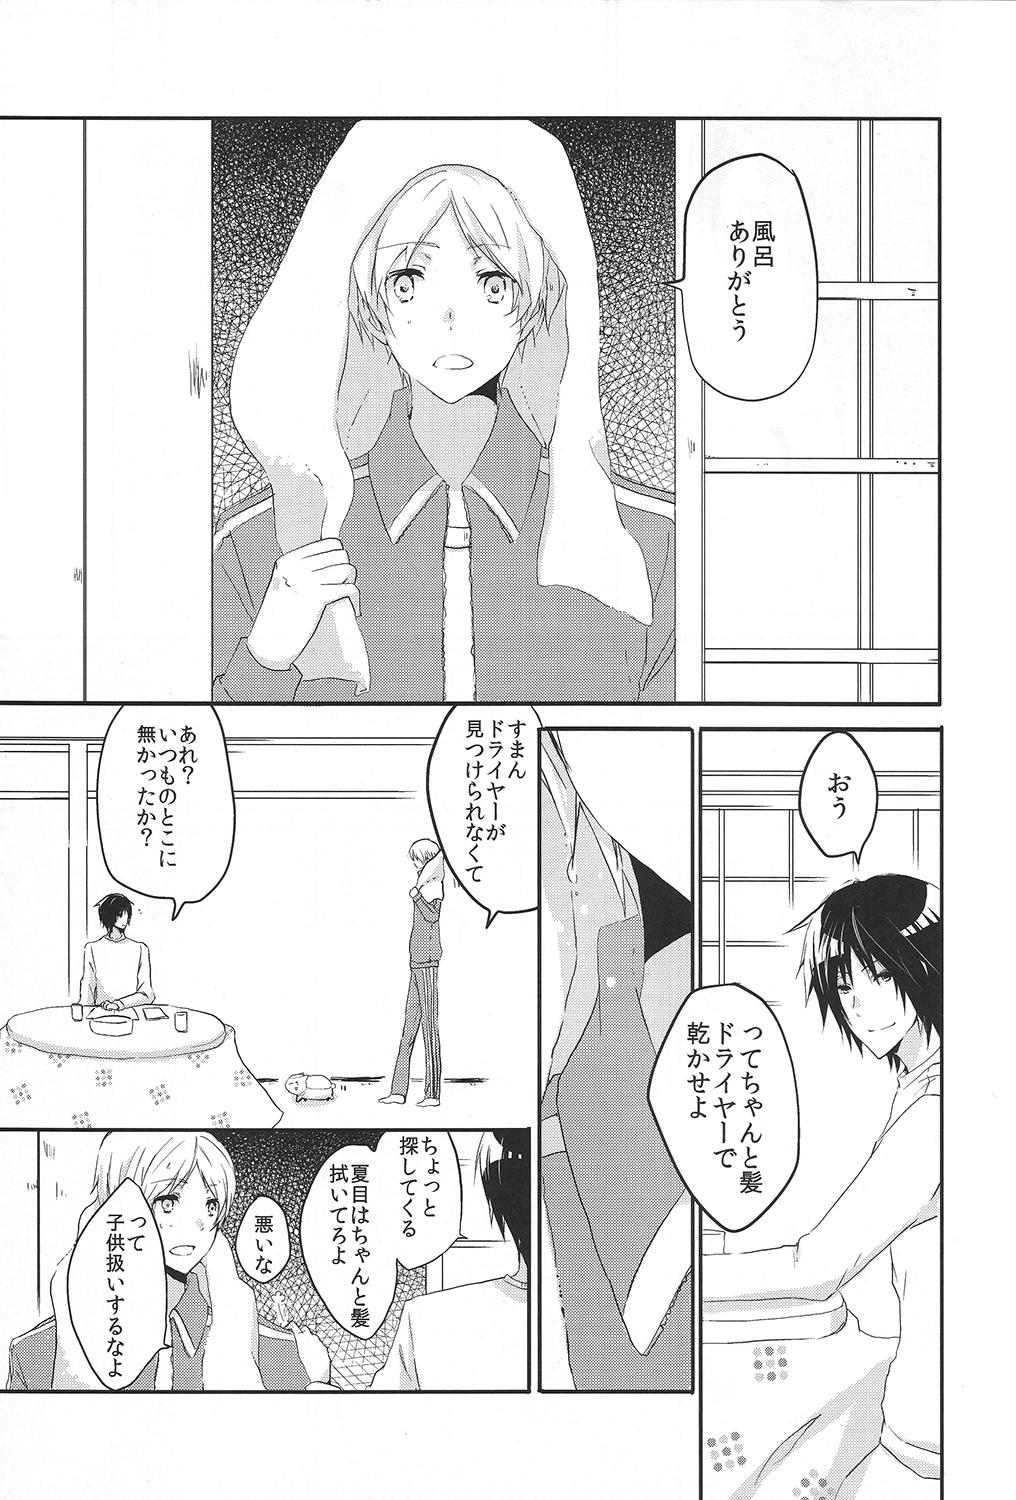 Camshow Marude Futari Dake no Sekai - Natsumes book of friends Kitchen - Page 3